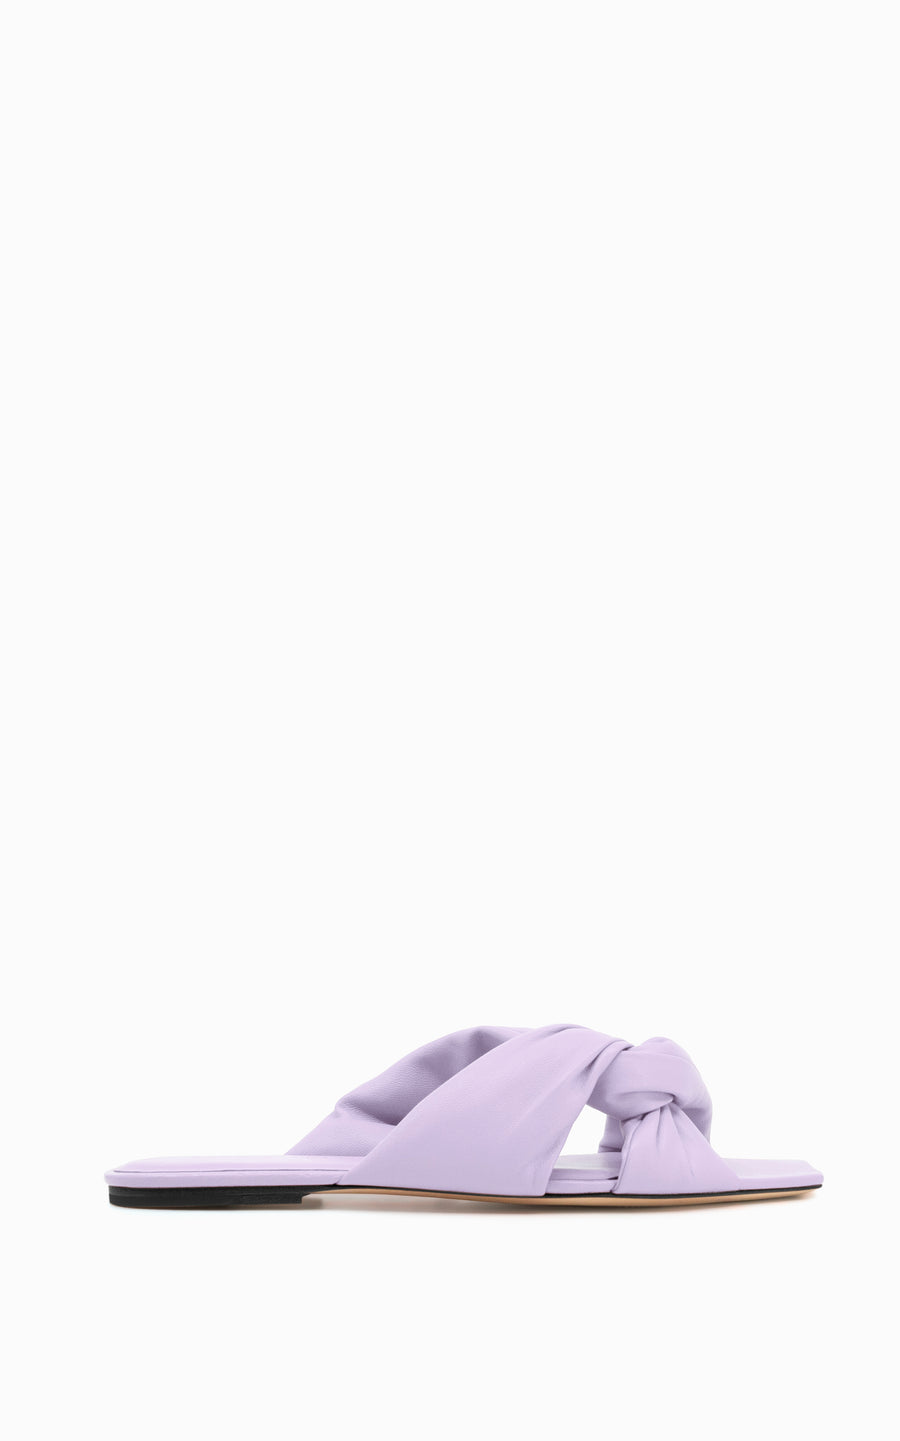 Pillow Loop Flat | Lilac